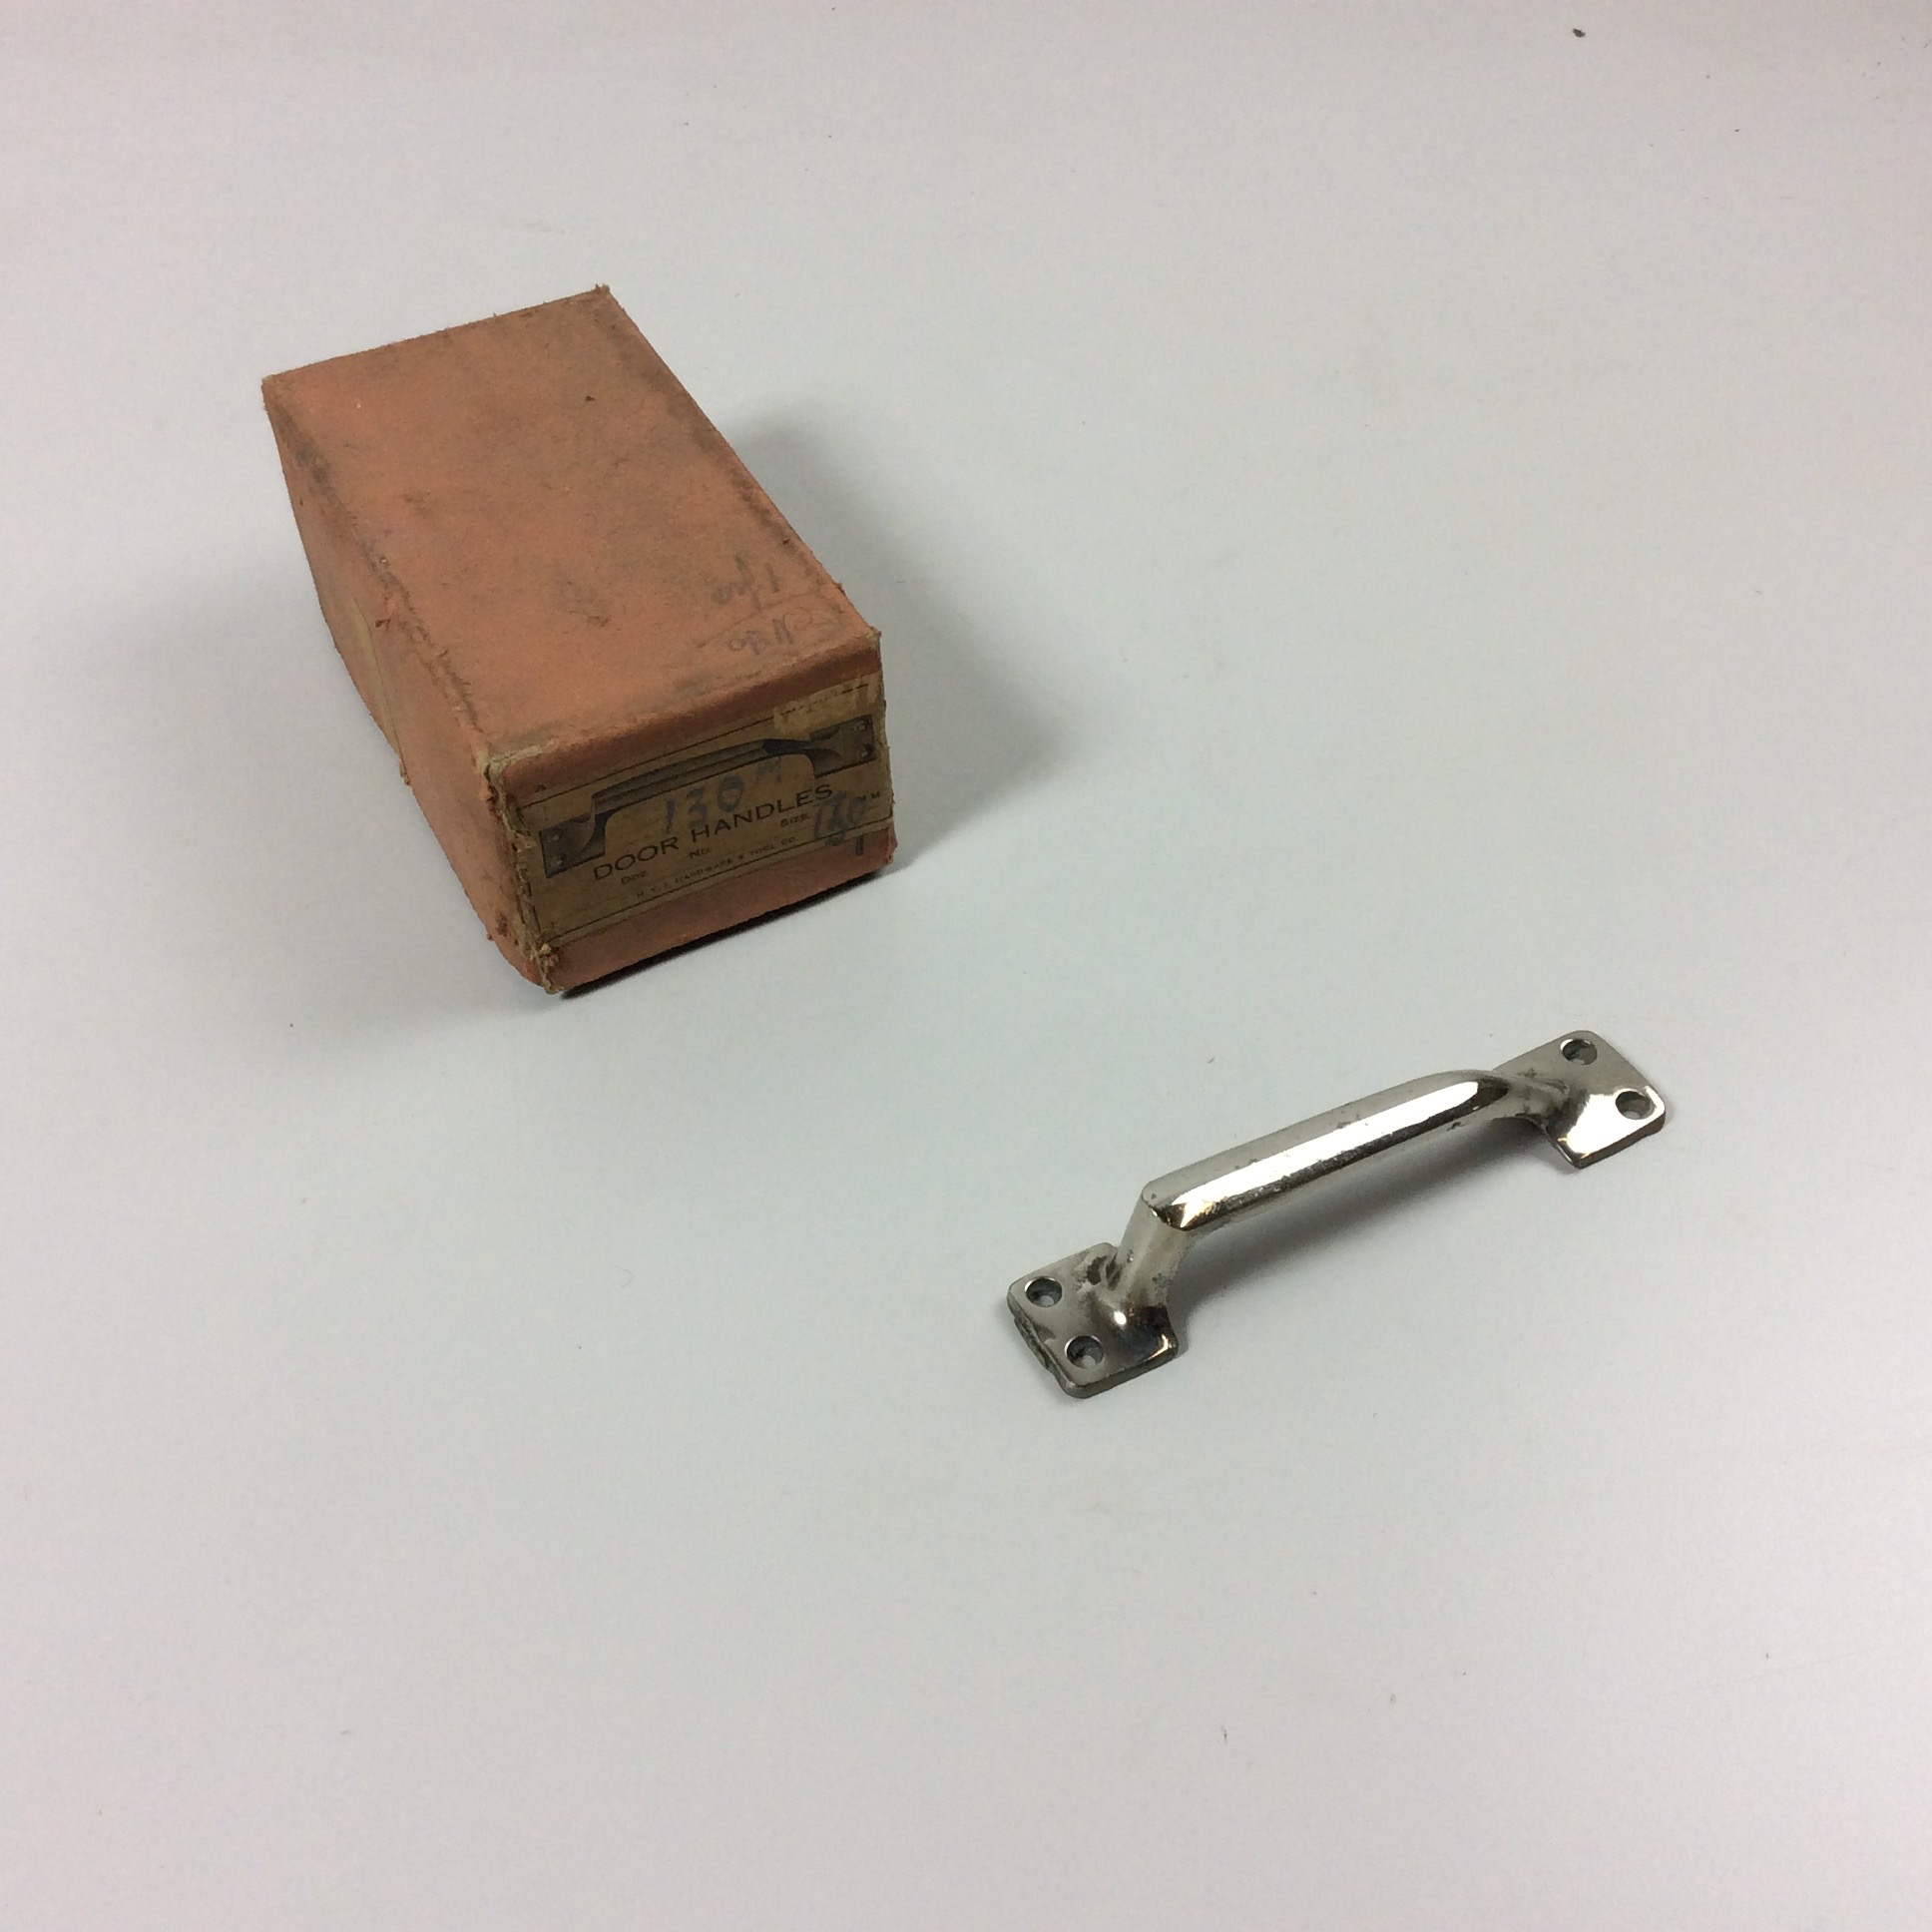 Chromed handle (13 cm)